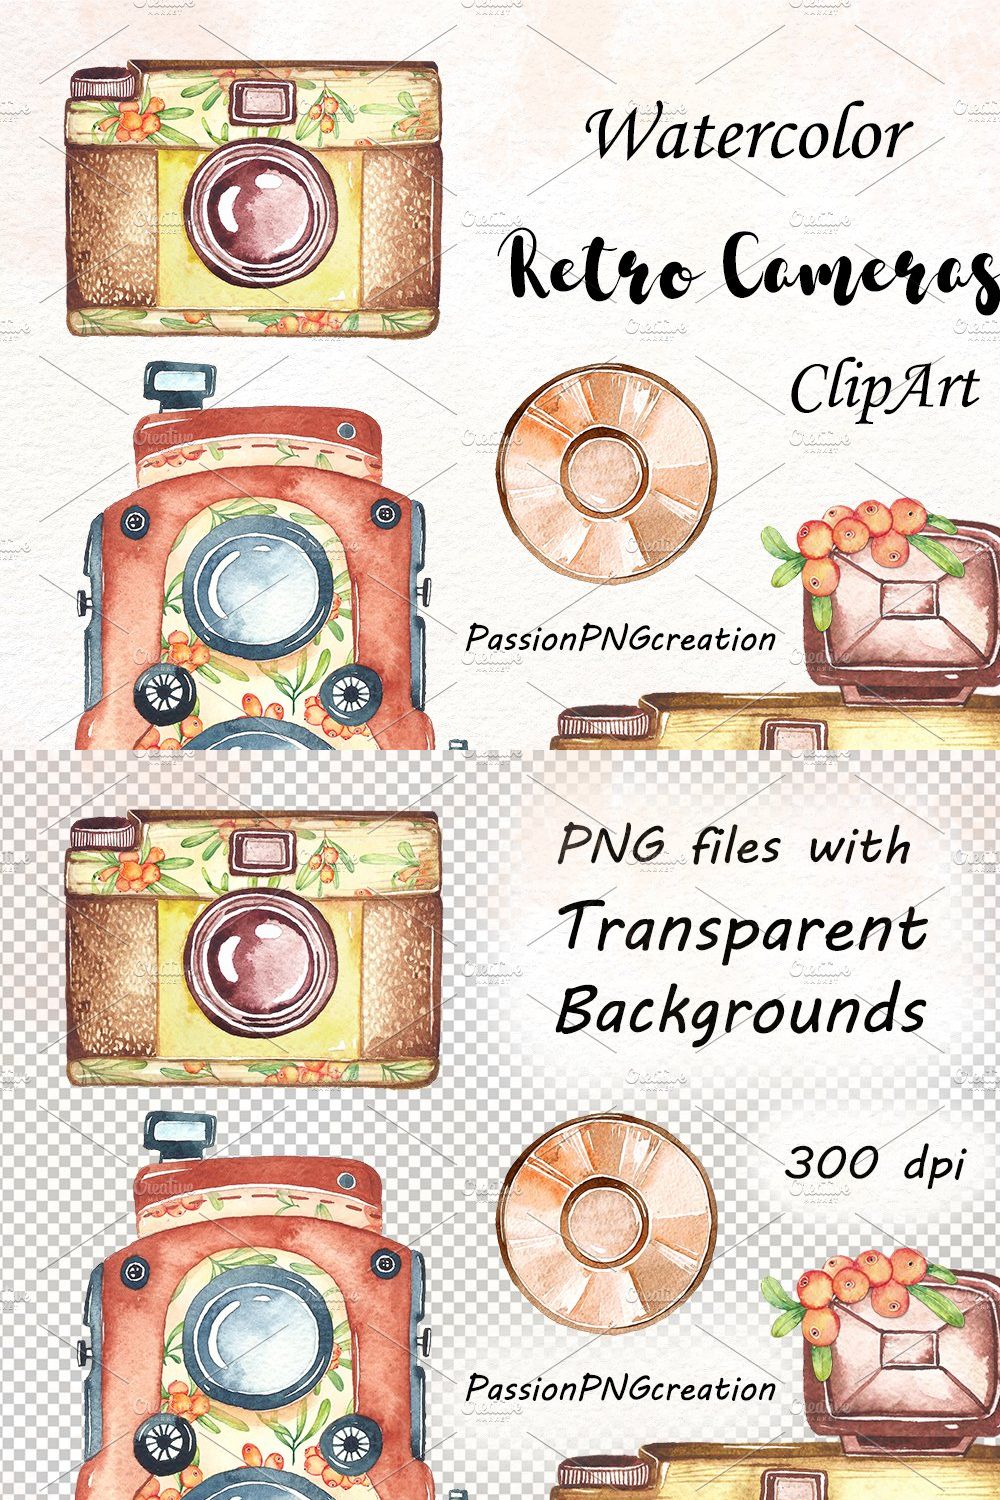 Watercolor Retro Cameras Clipart pinterest preview image.